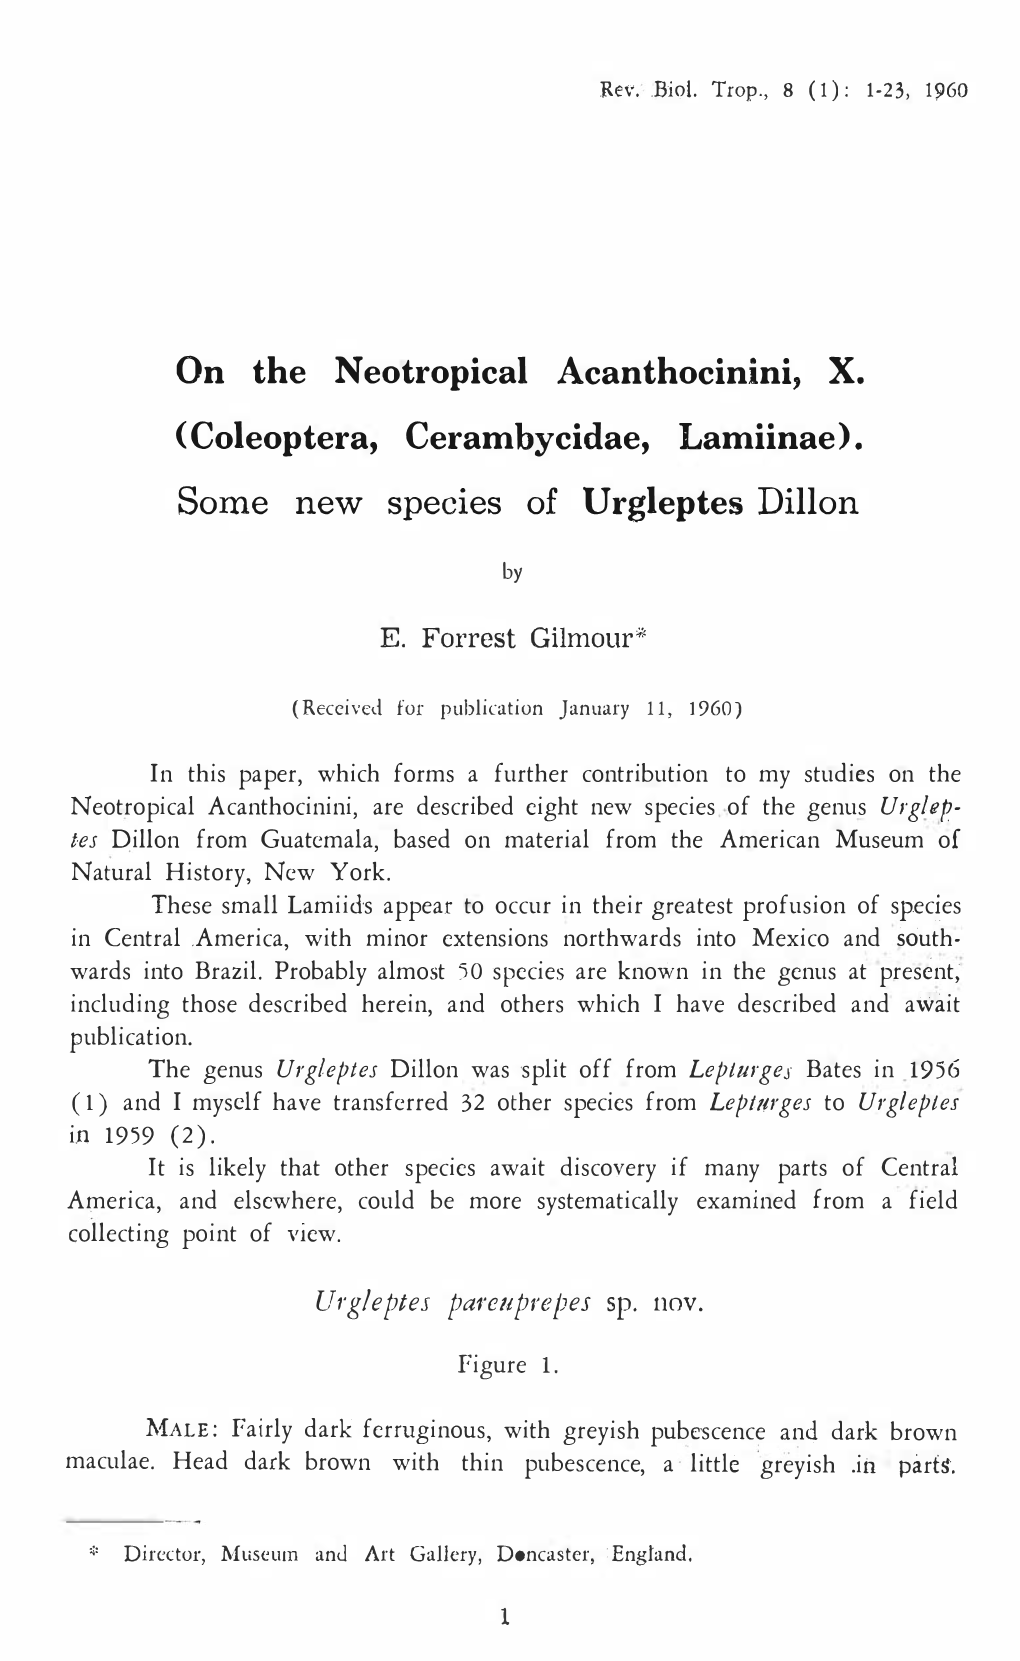 On the N Eotropical Acanthocinini, X. (Coleoptera, Cerambycidae